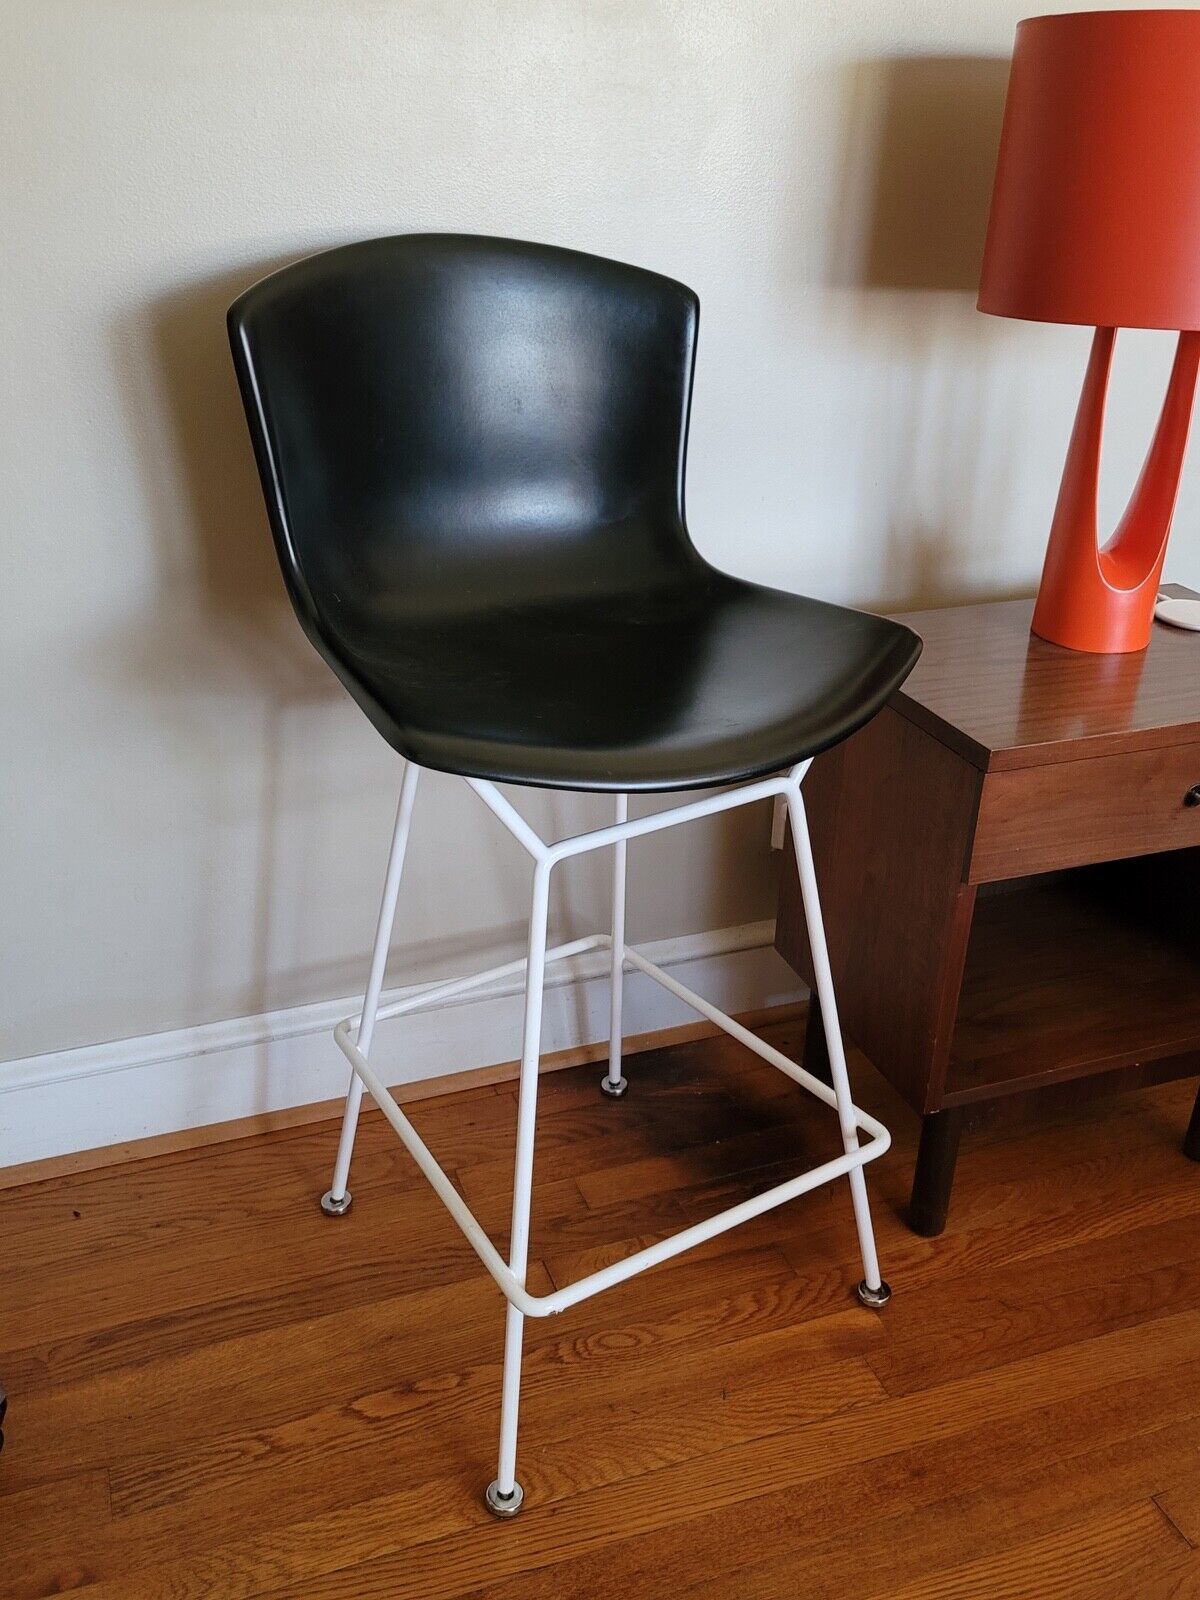 Vintage Harry Bertoia Knoll black fiberglass tall Bar stool black & white chair - $316.79